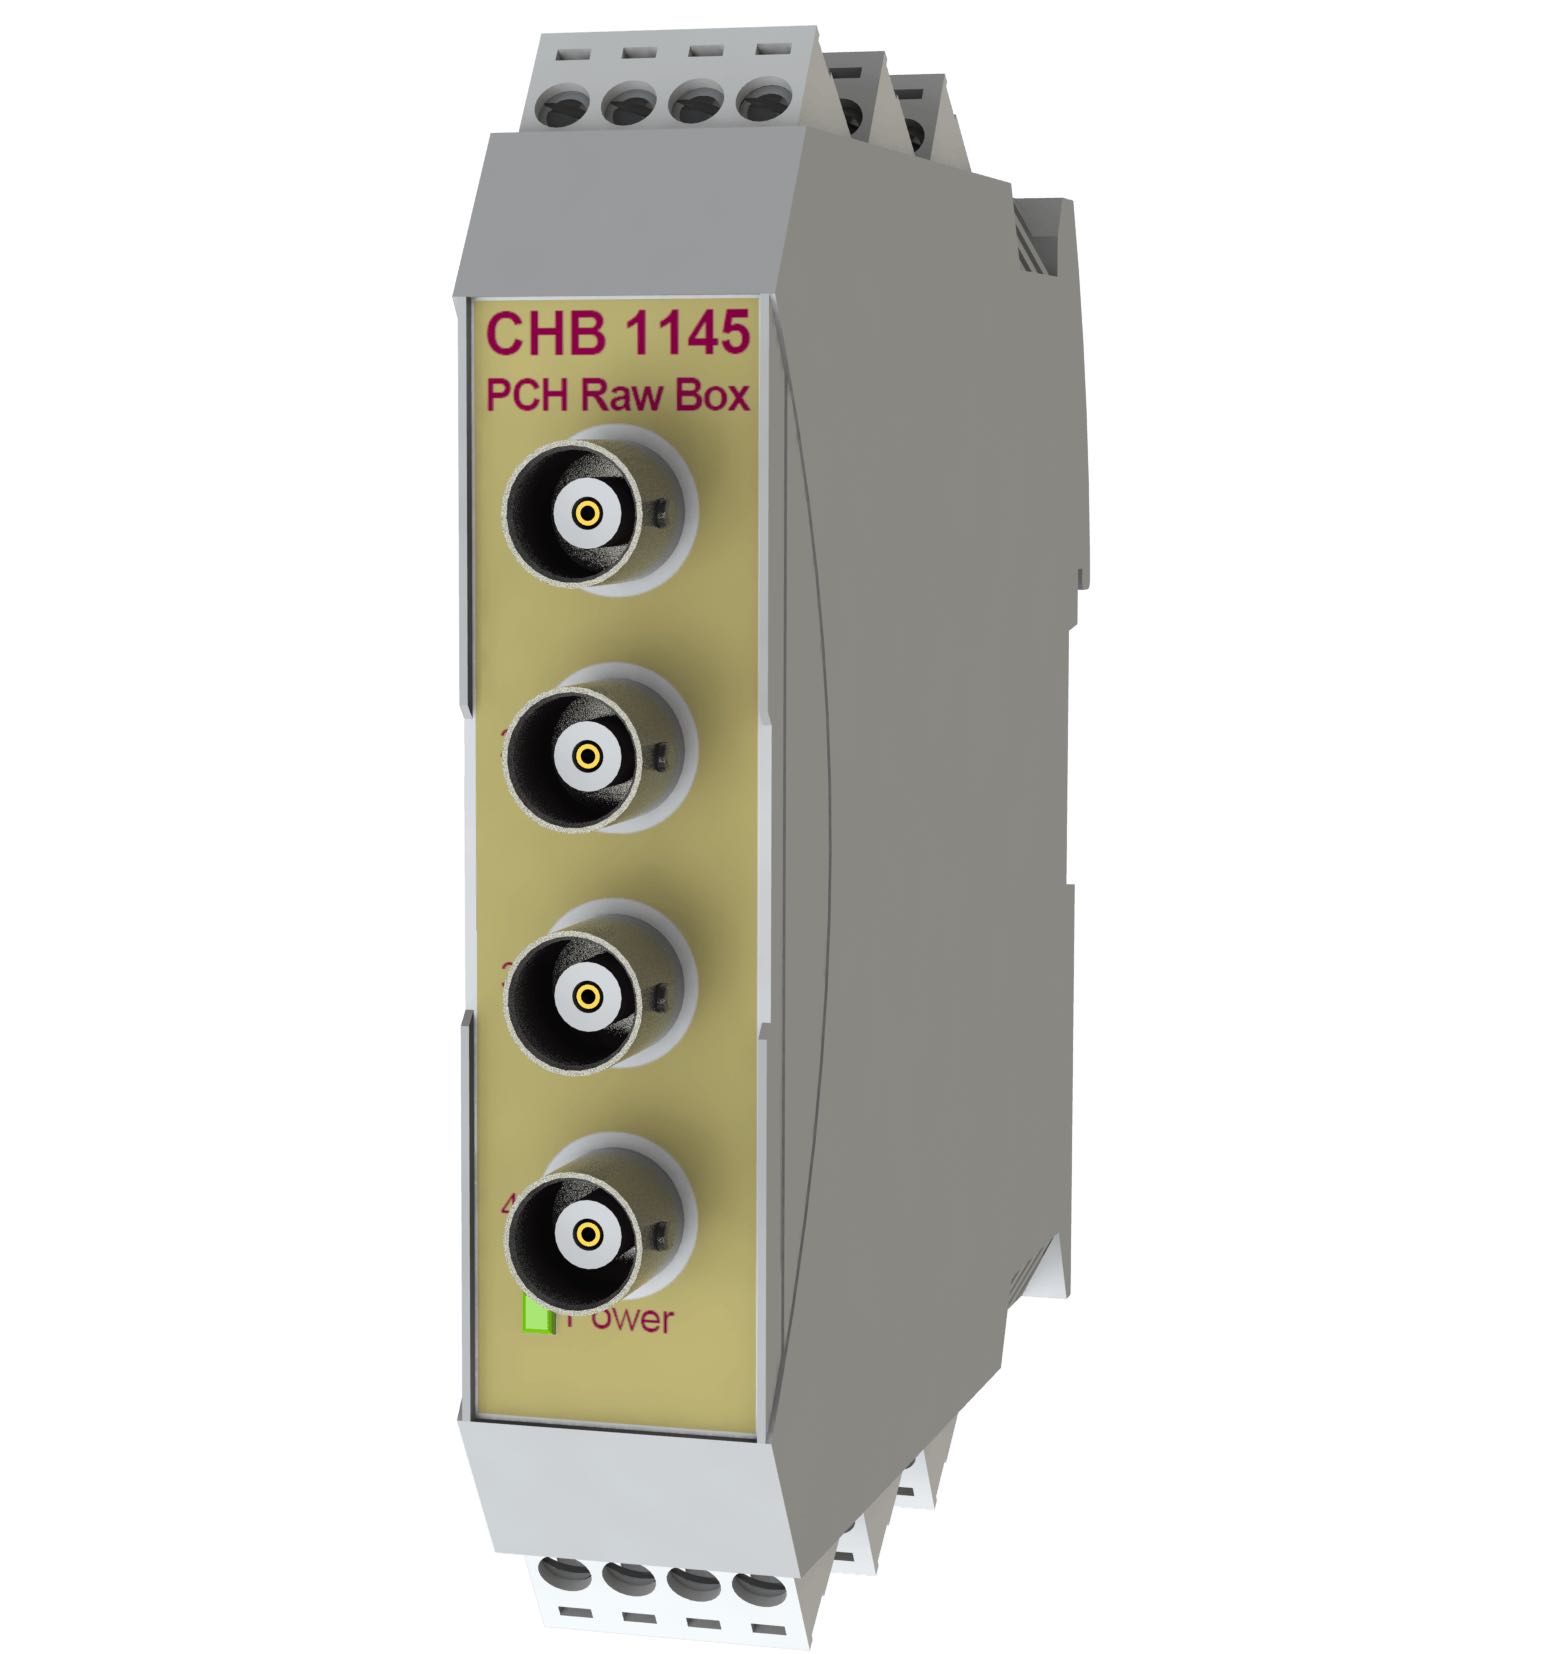 PCH Raw Box CHB 1145